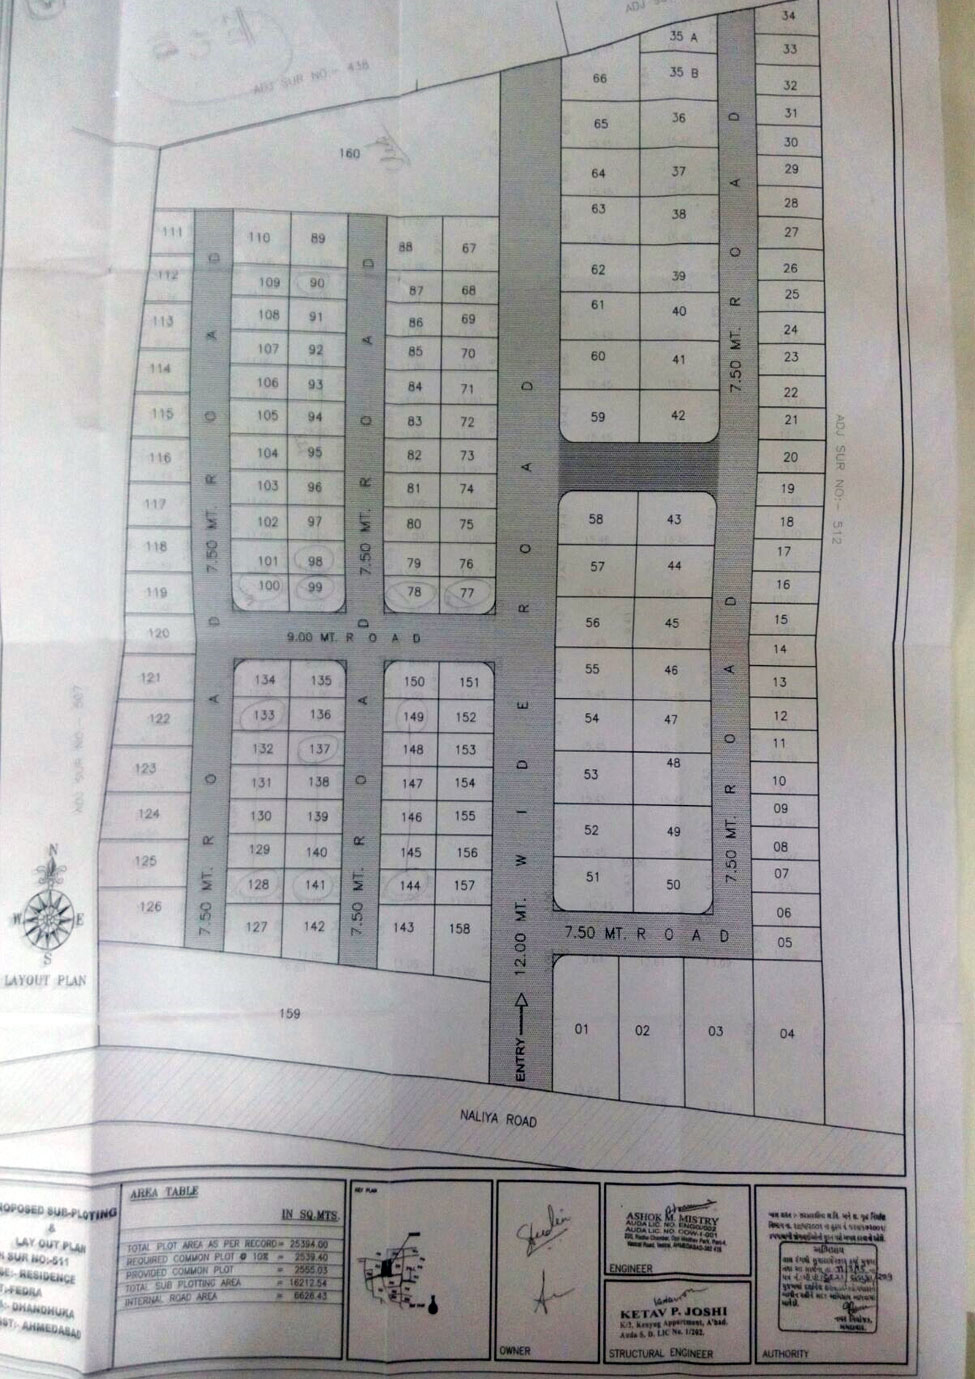 Project Layout of Dholera Smart City